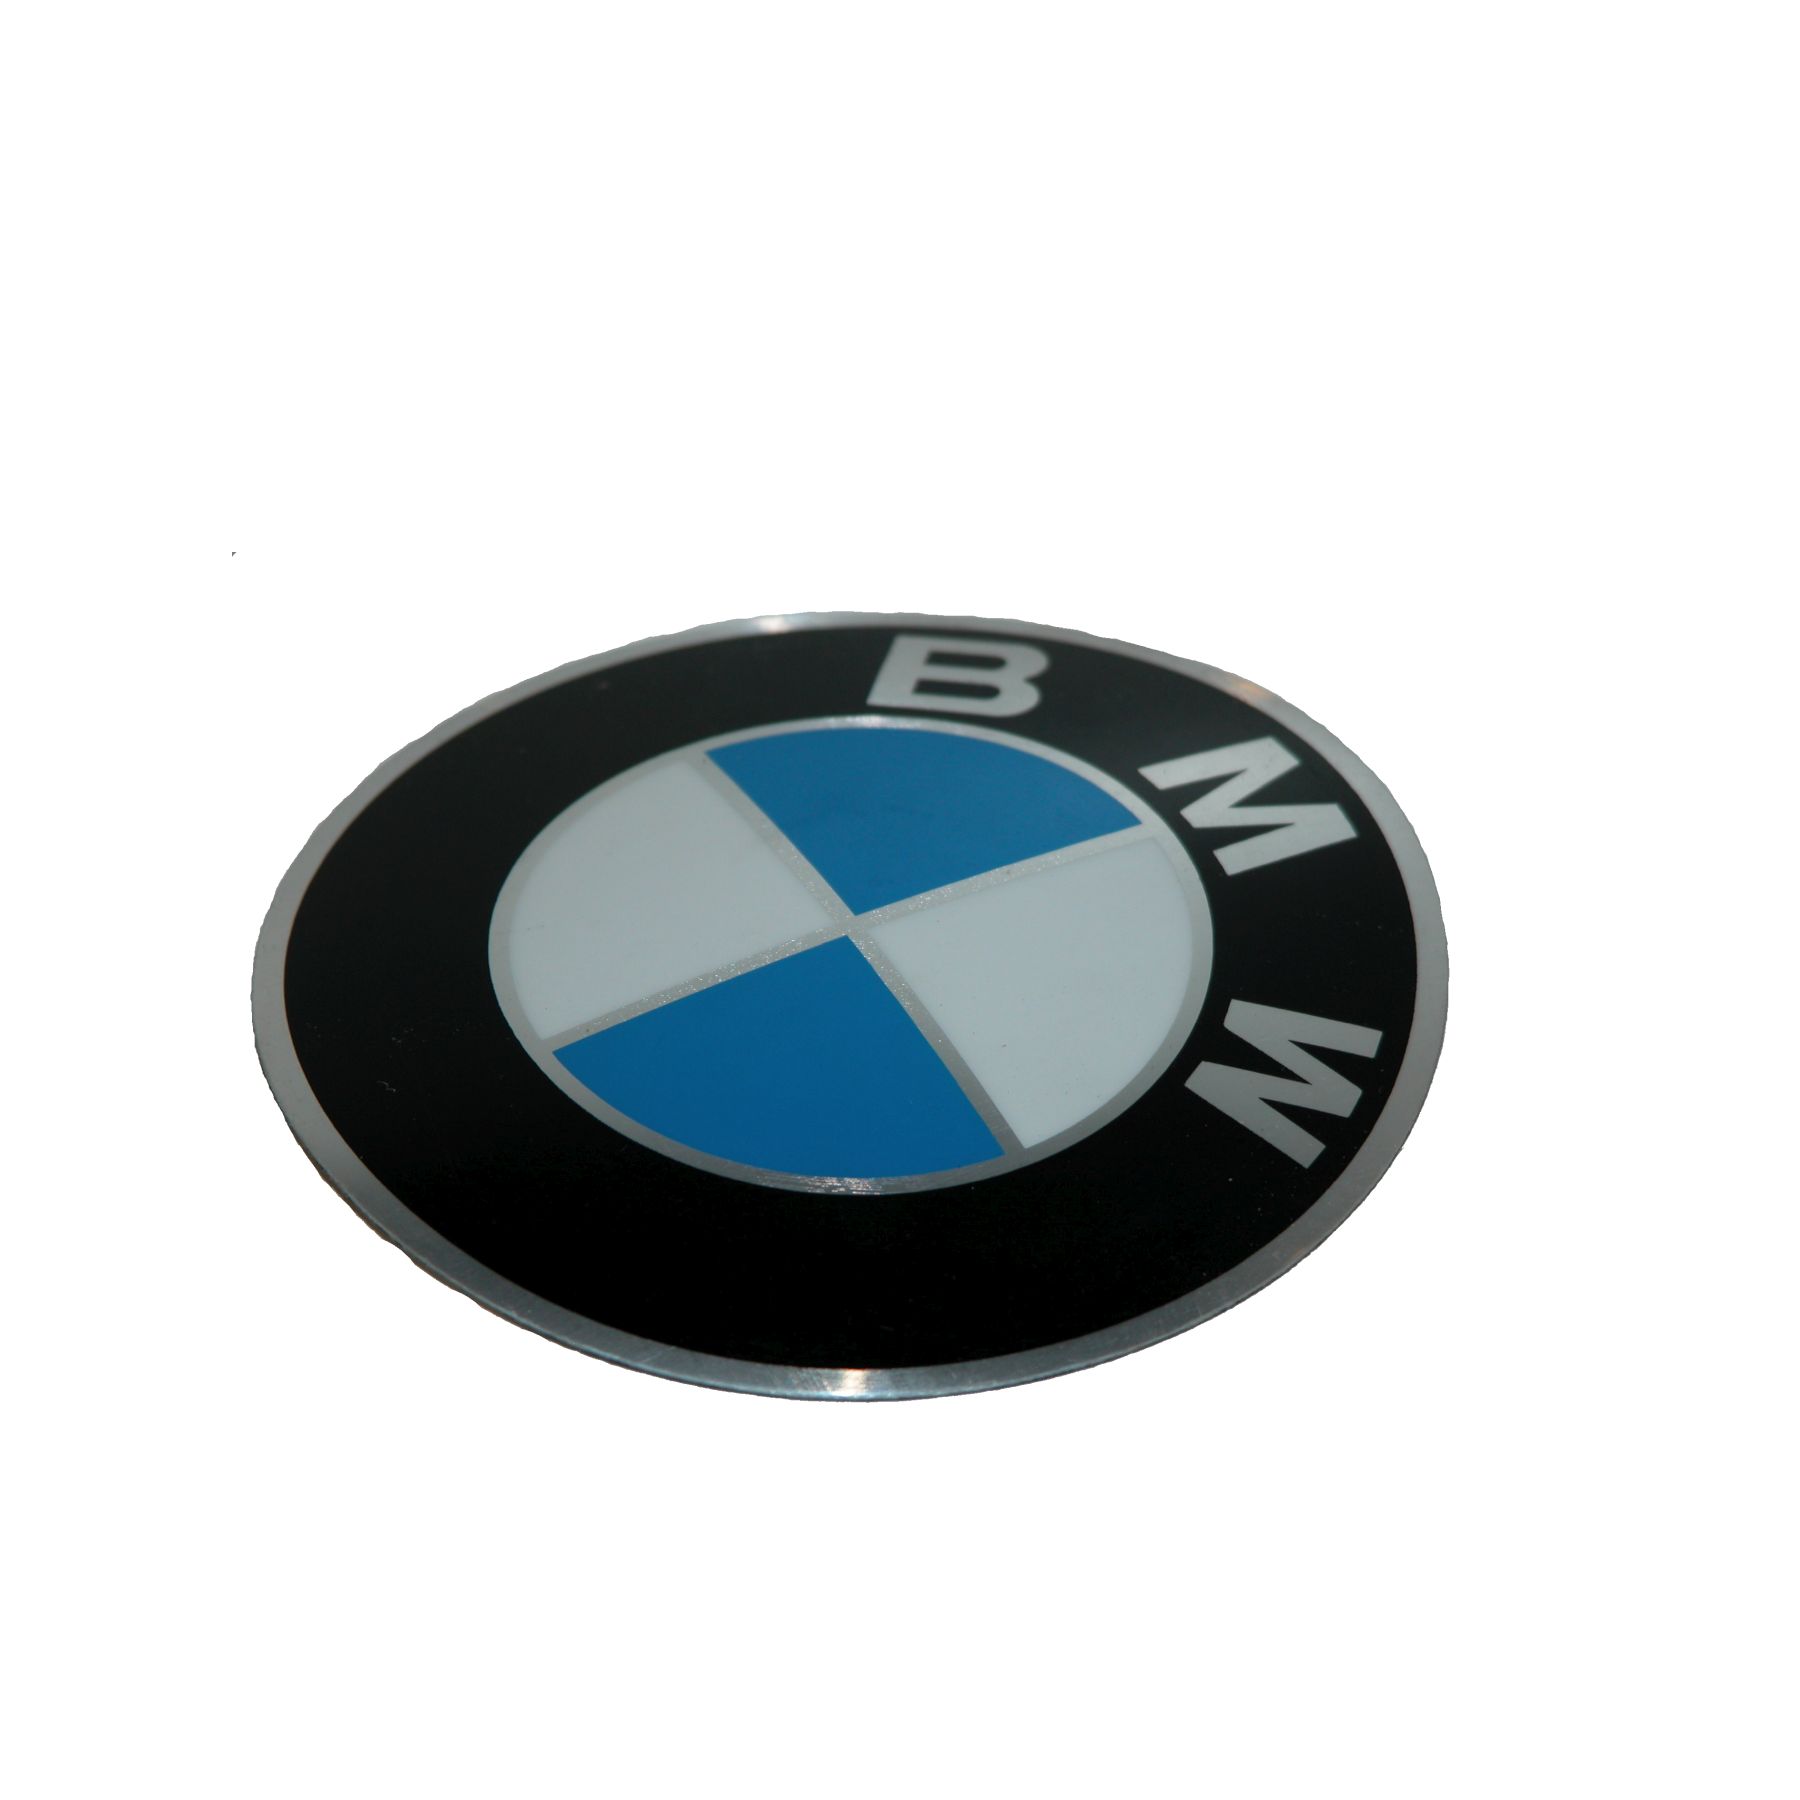 https://www.swt-sports.de/media/images/org/52537686465_BMW_Emblem_SWT.jpg